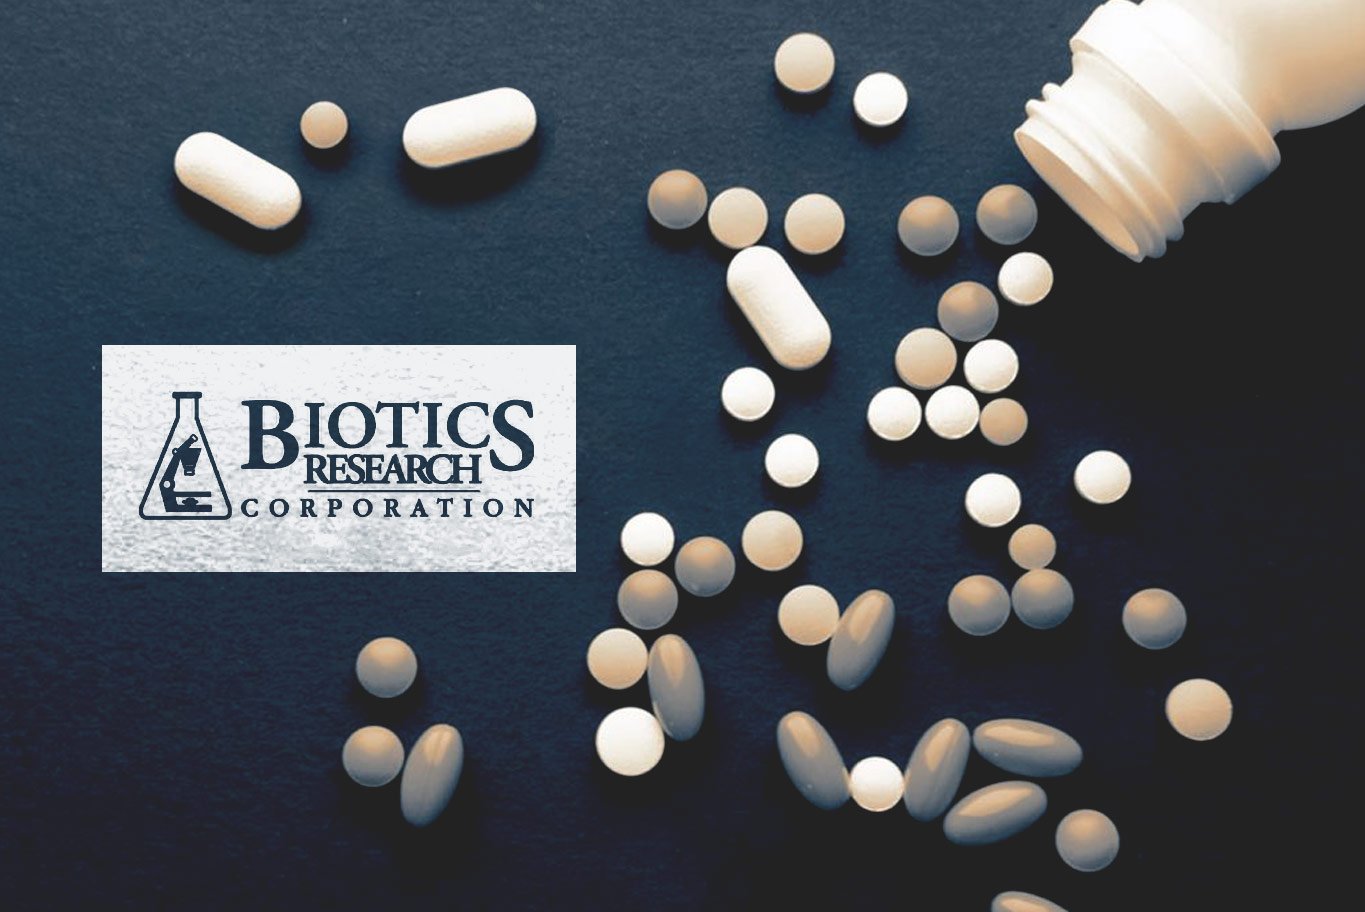 biotics research supplements logo wallpaper optimus medica